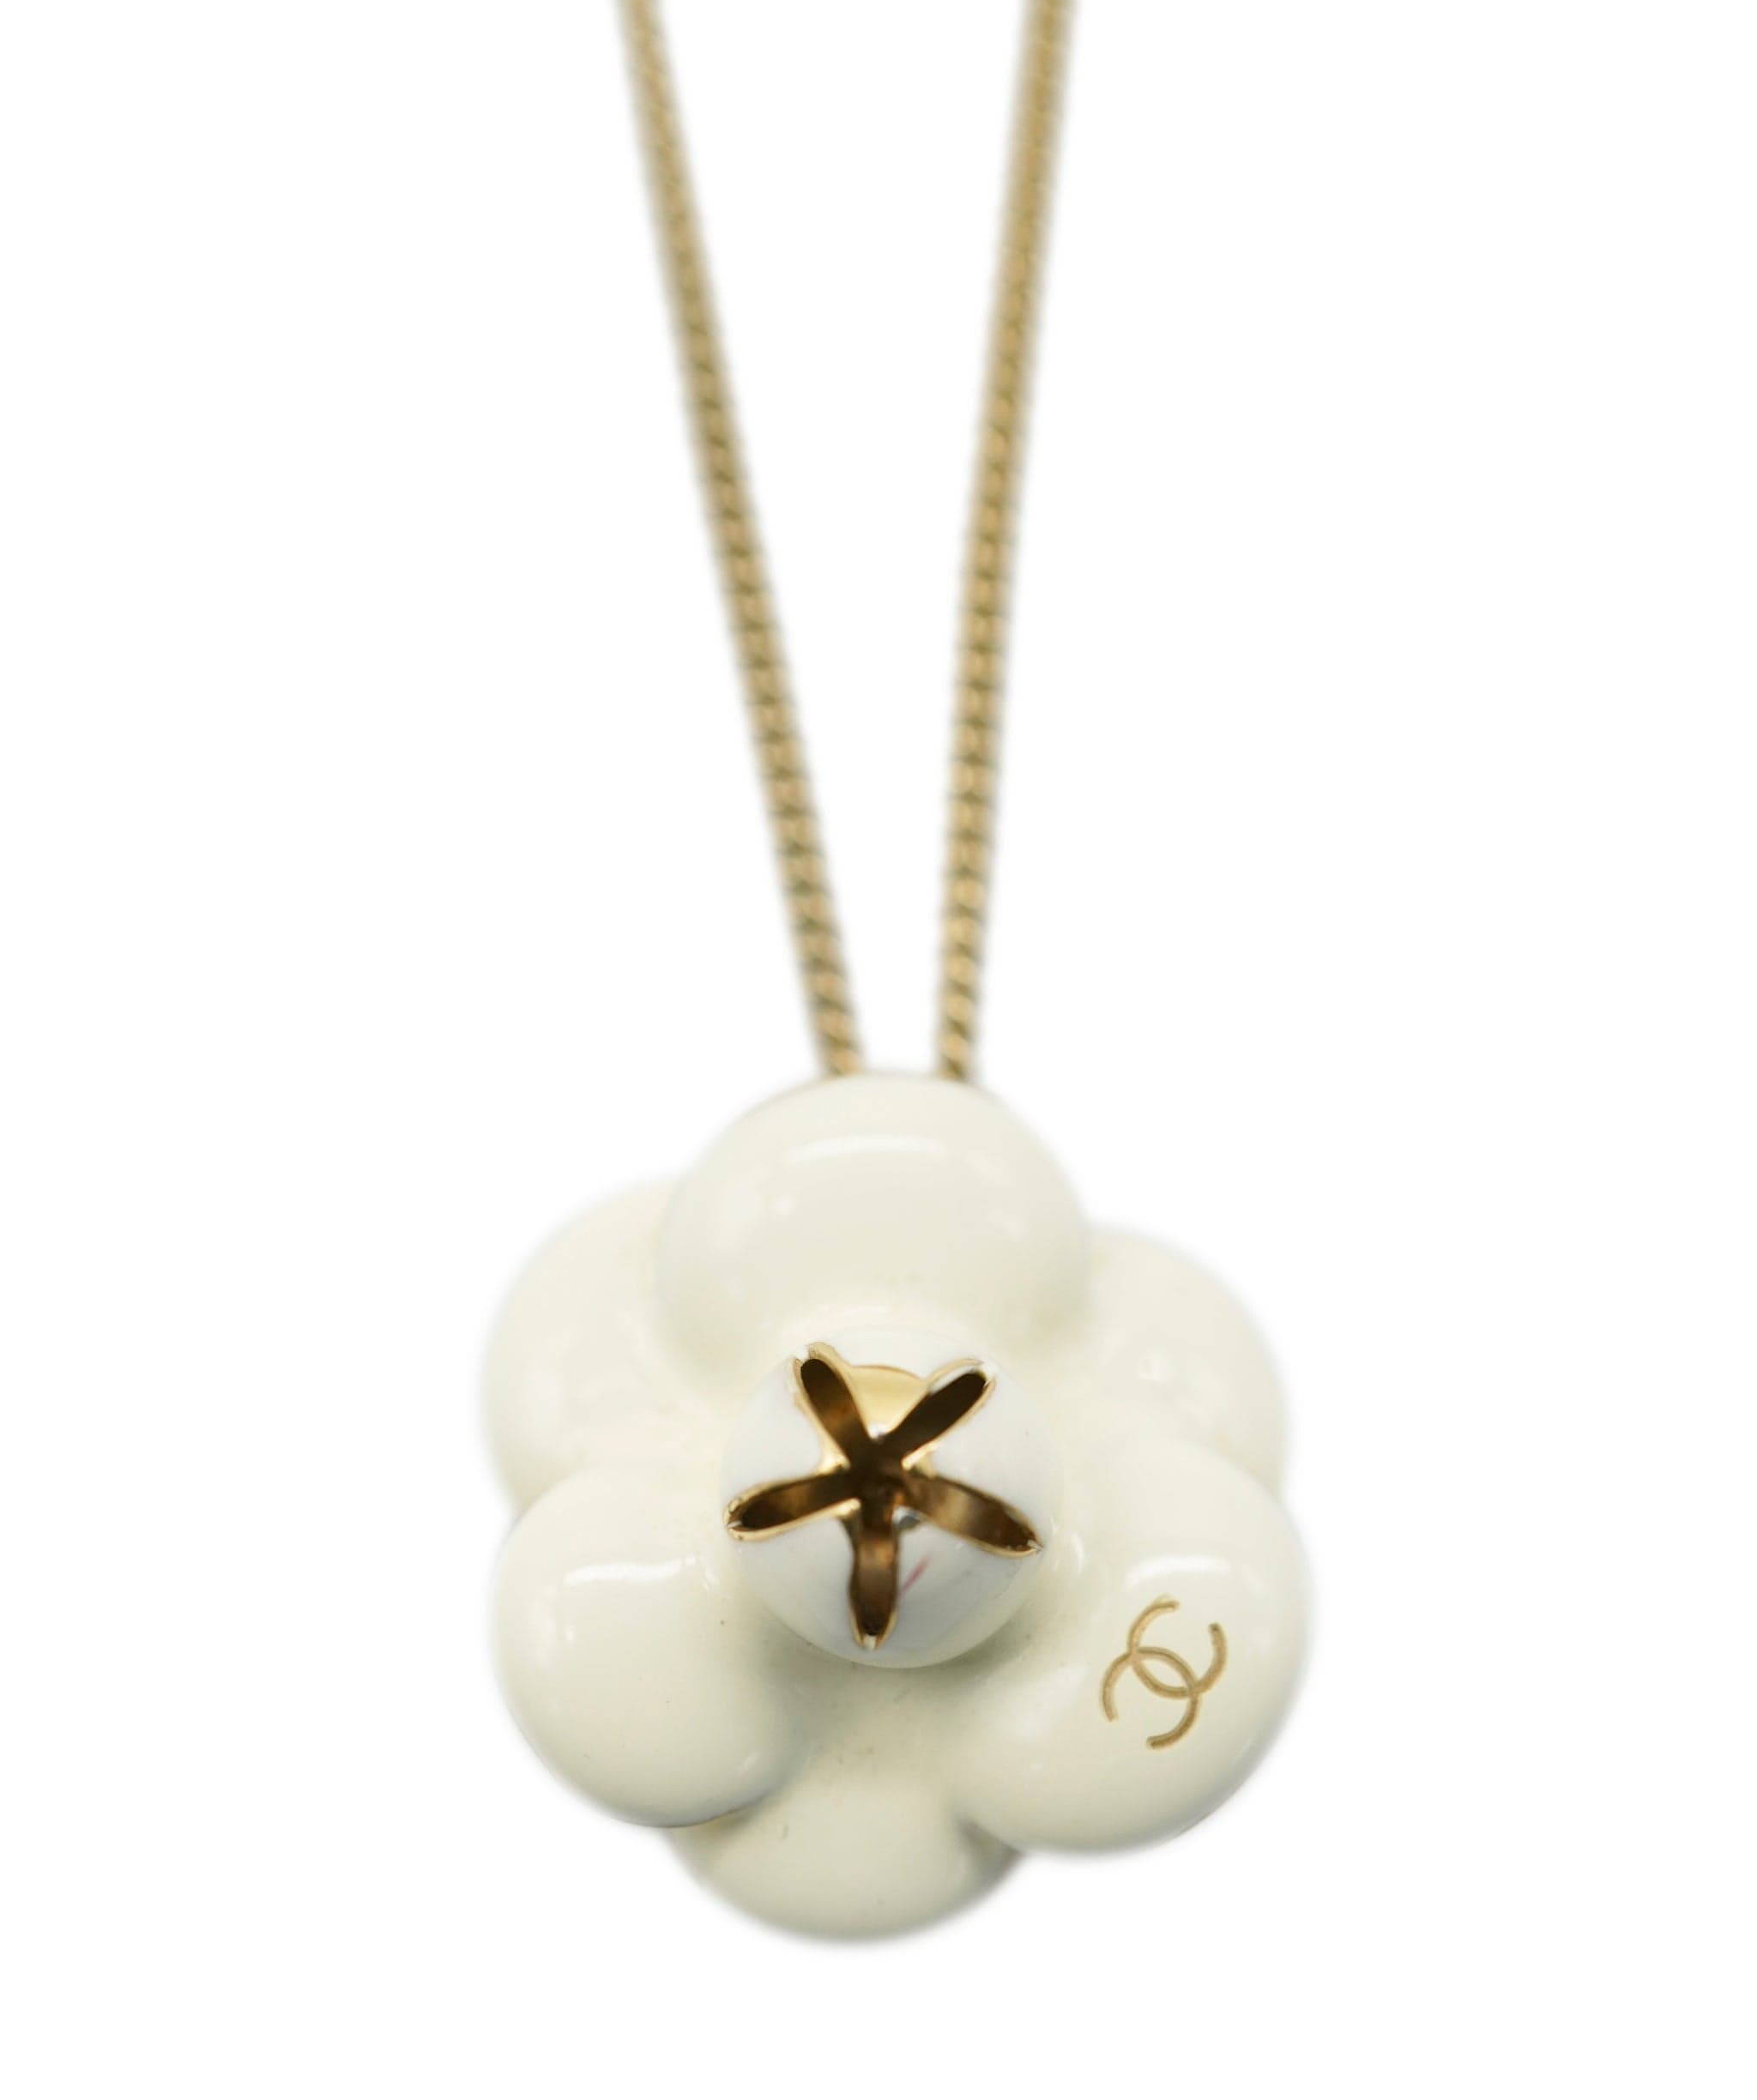 Chanel Chanel cream camellia flower pendant necklace - AJL0184